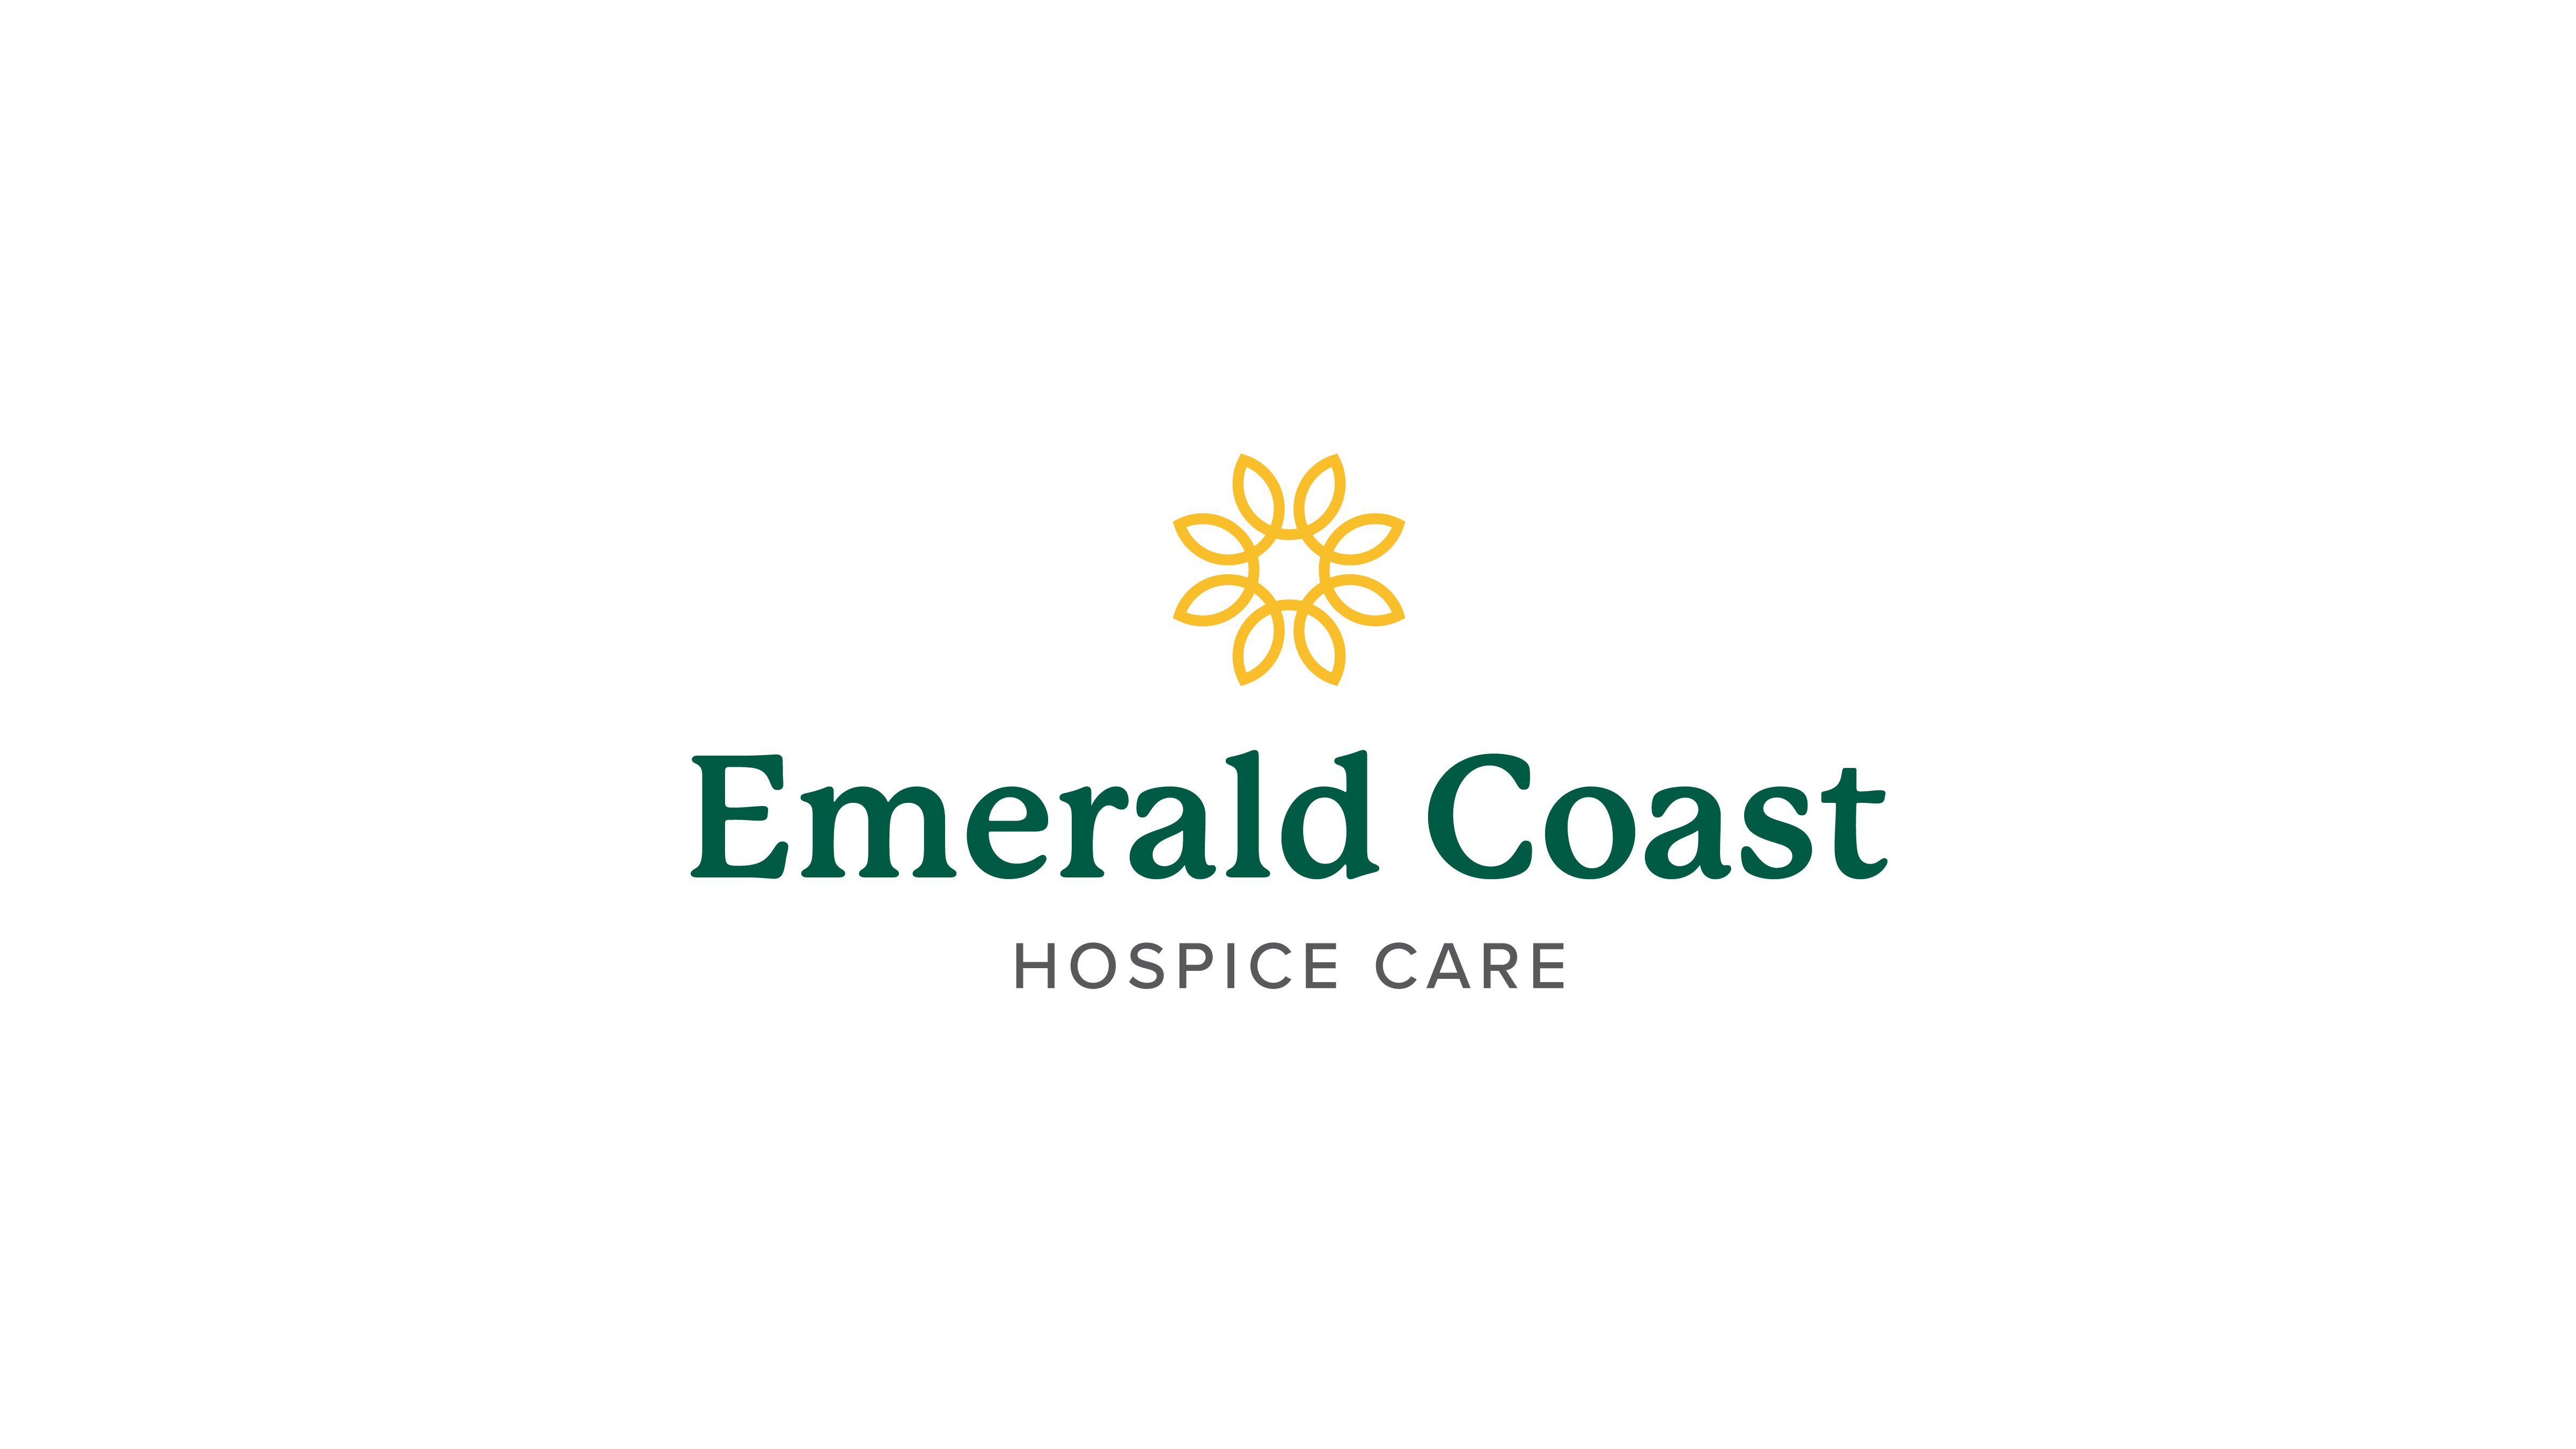 Emerald Coast Hospice (Presenting) 